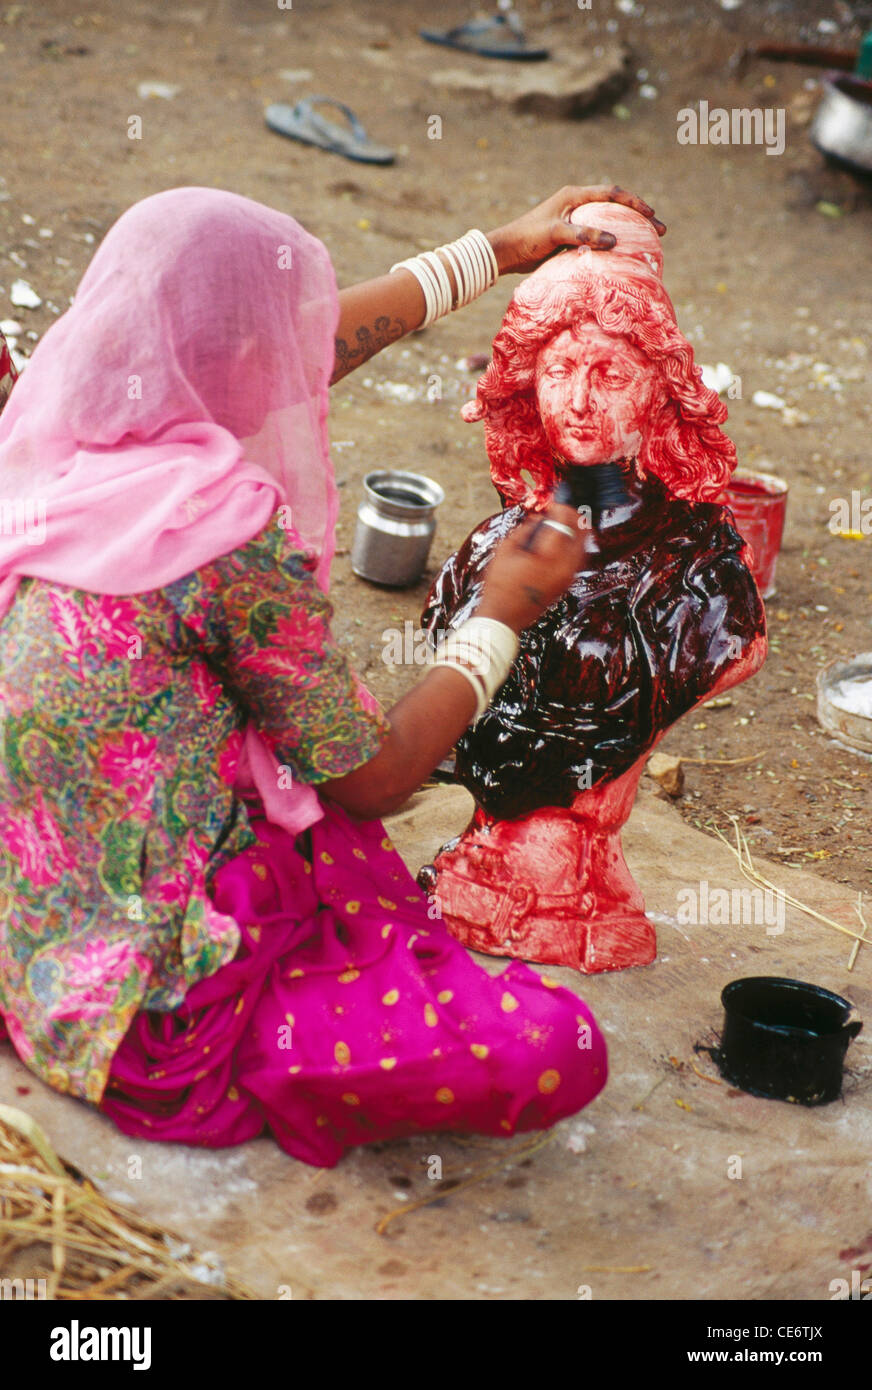 HMA 85116 : woman painting plaster of paris sculpture maharashtra india Stock Photo